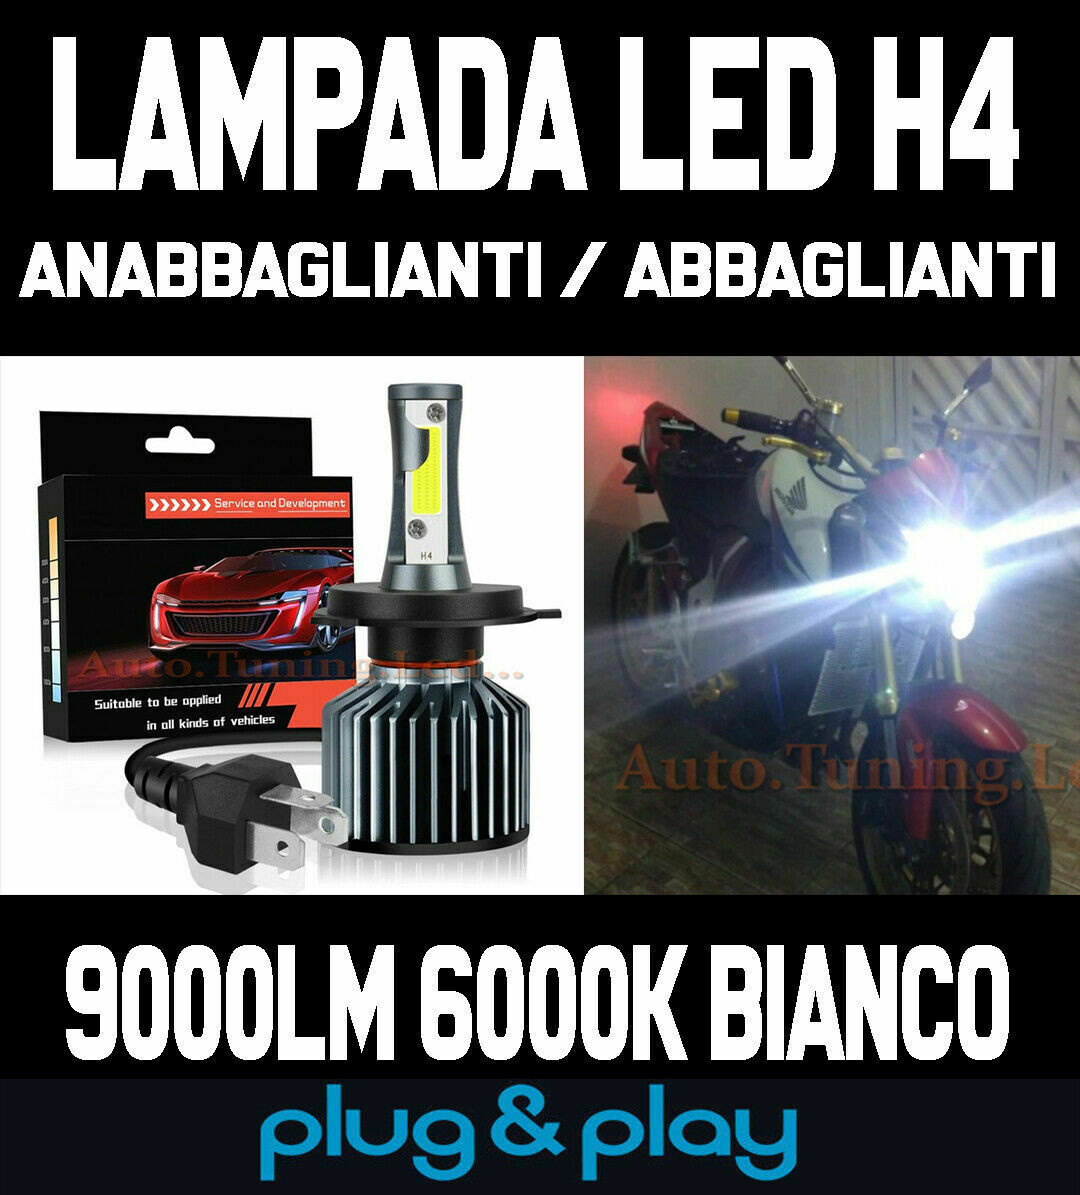 KYMCO LIKE LAMPADA LED H4 6000K CANBUS 9000LM ANABBAGLIANTI / ABBAGLIANTI